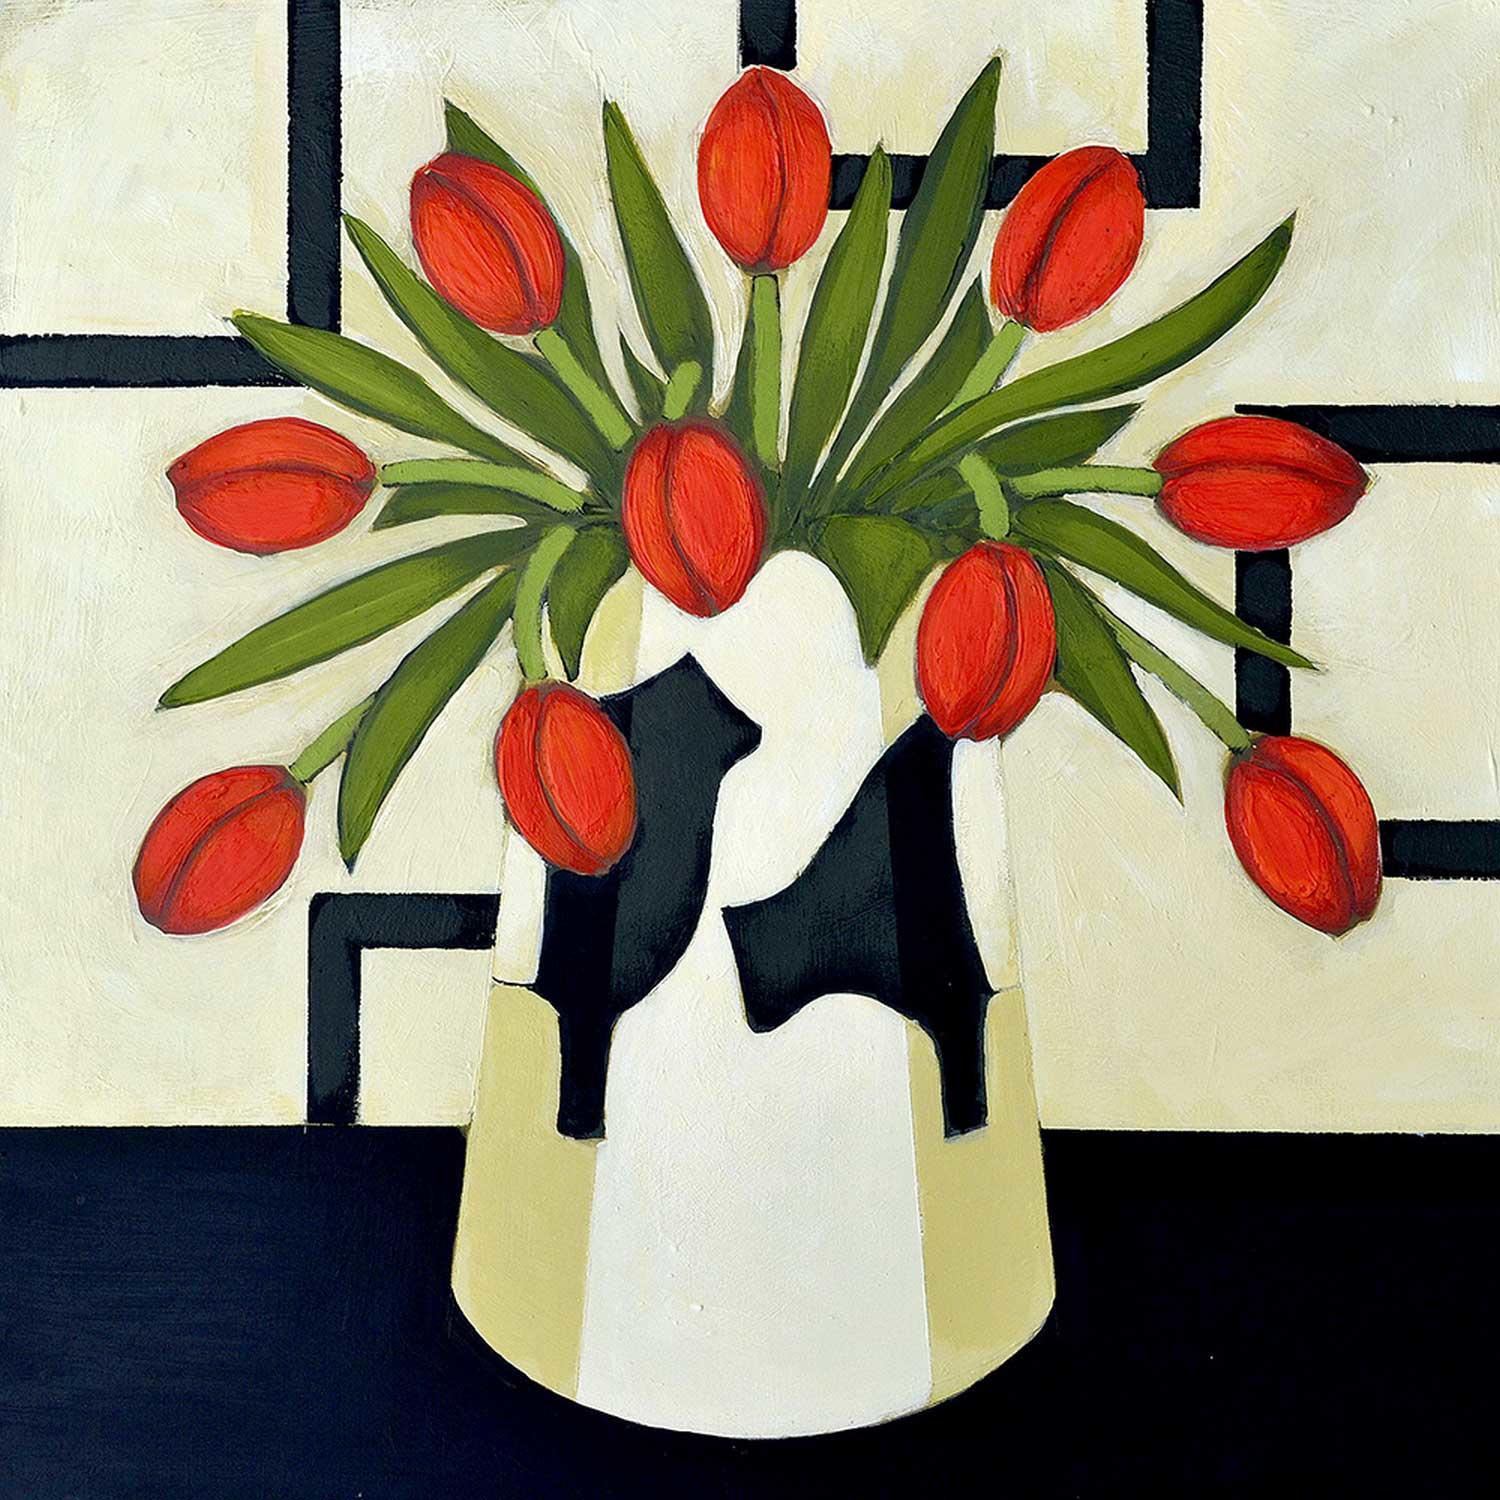 Red Tulips in a Beltie Vase by Fiona Millar